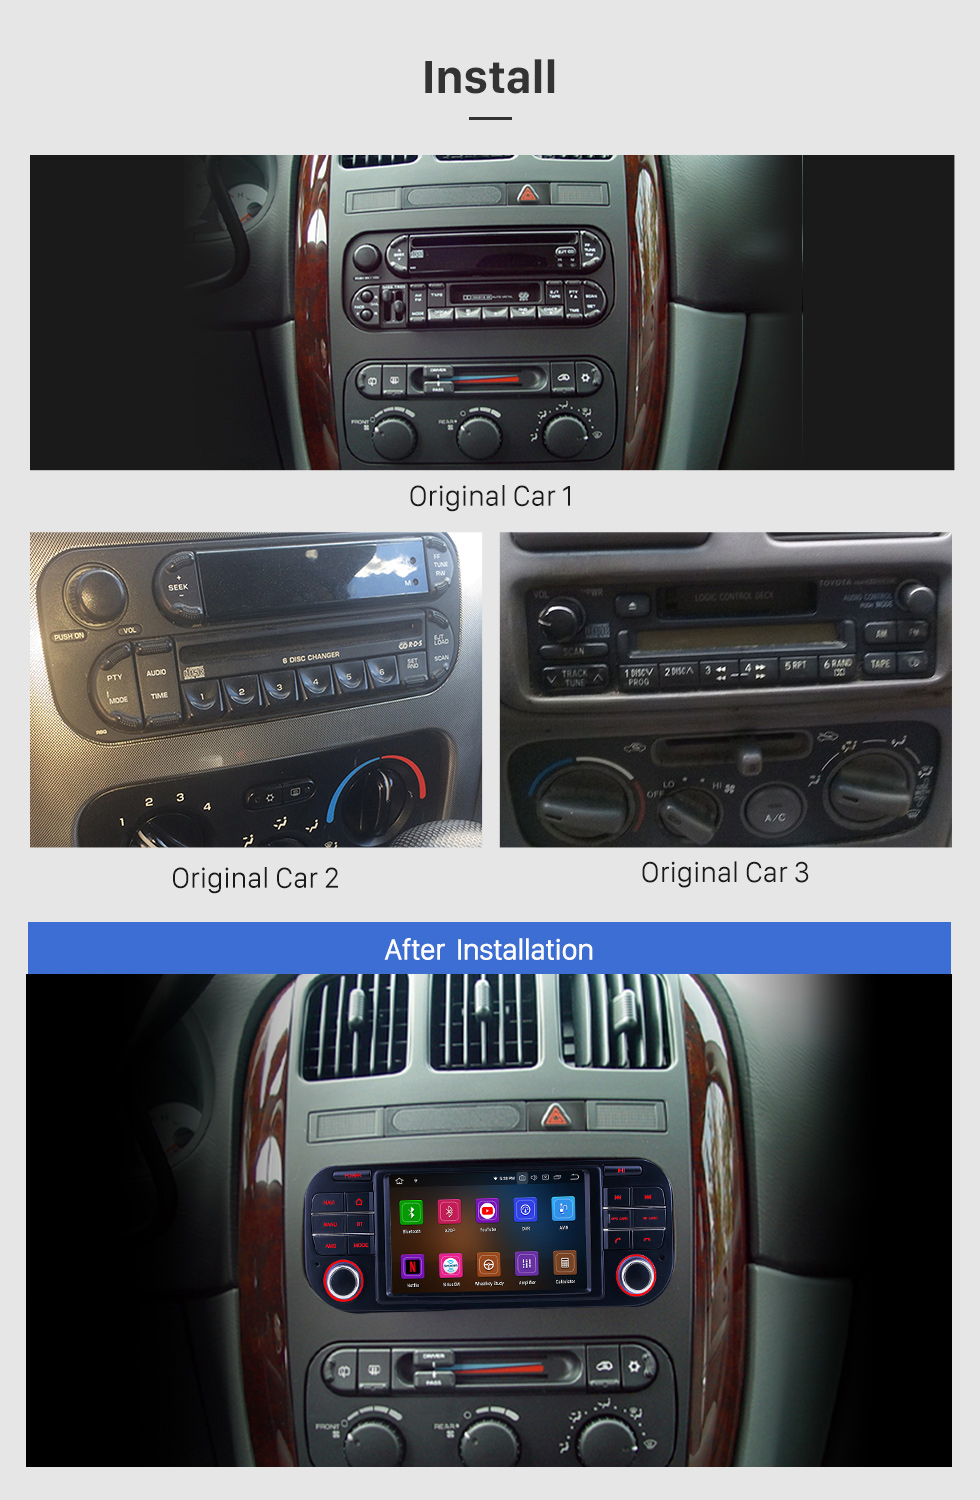 Seicane DVD Player Radio GPS Navigation System For 2002-2010 Chrysler PT Cruiser Sebring Support TPMS Touch Screen DVR OBD Mirror Link 3G WiFi TV Backup Camera Bluetooth Video 